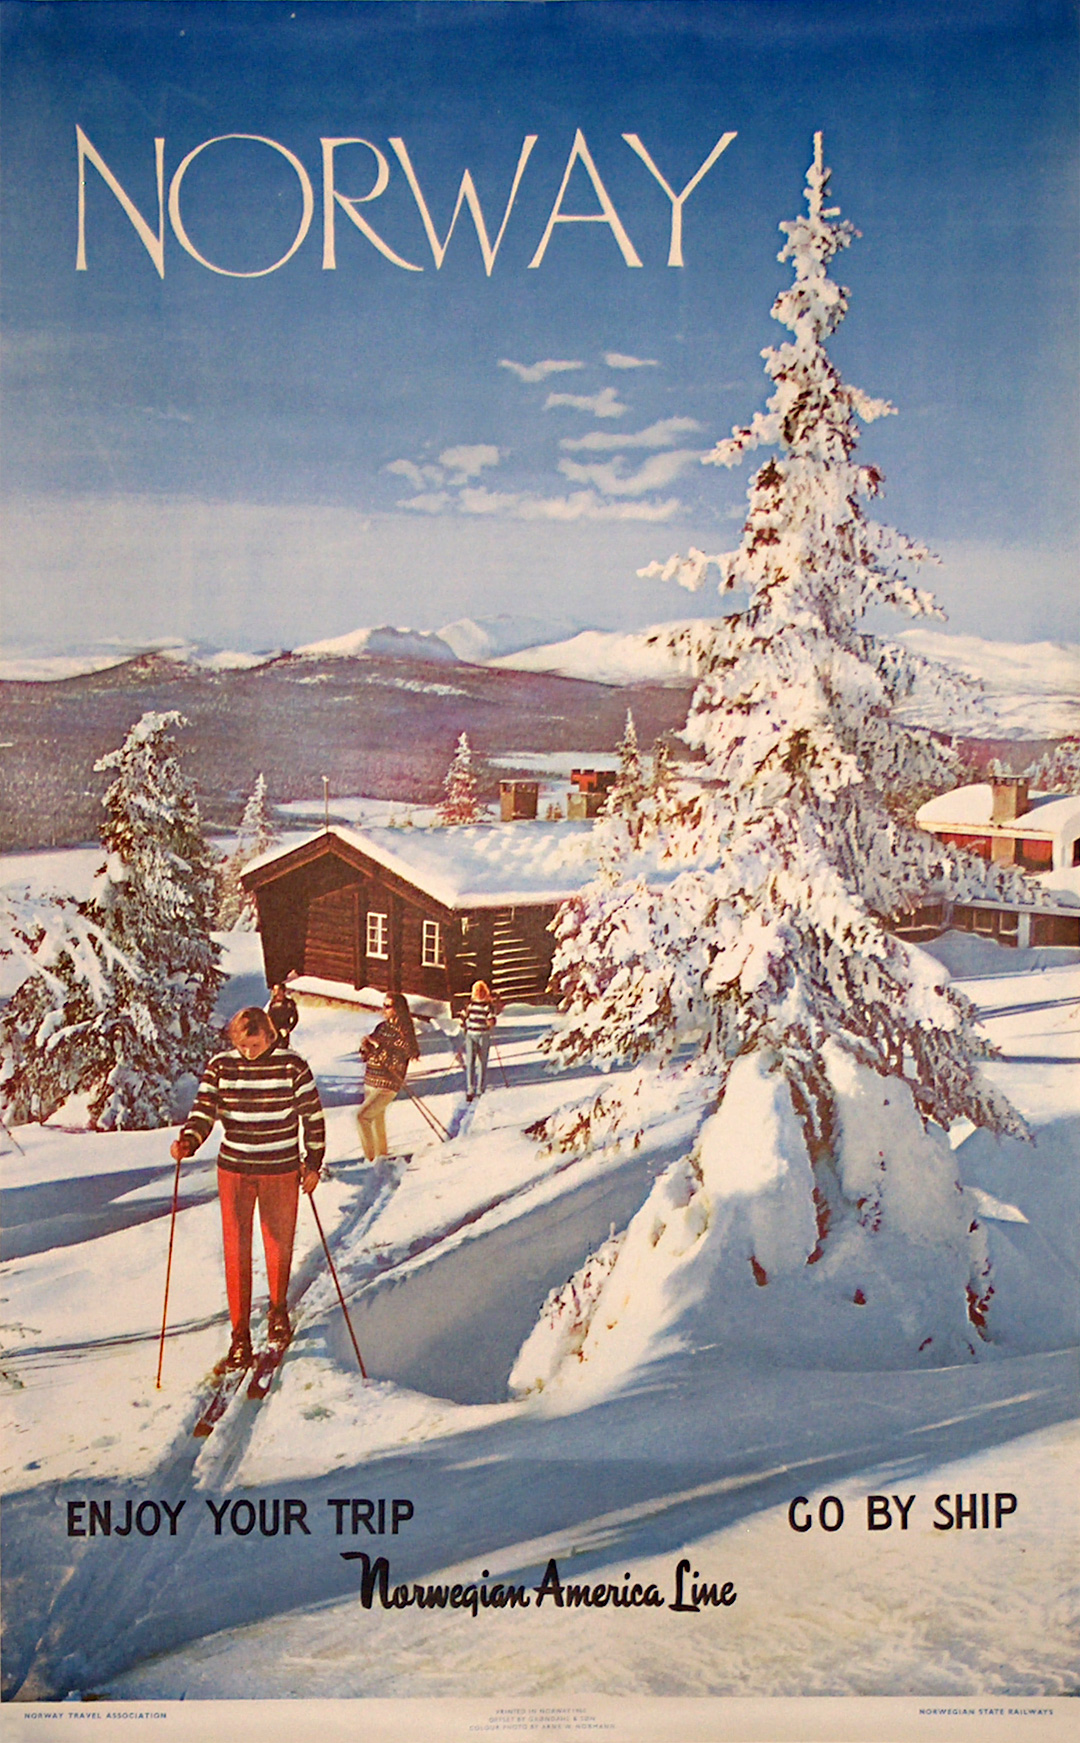 Original vintage poster: Norway - Ski - Norwegian America Line for sale